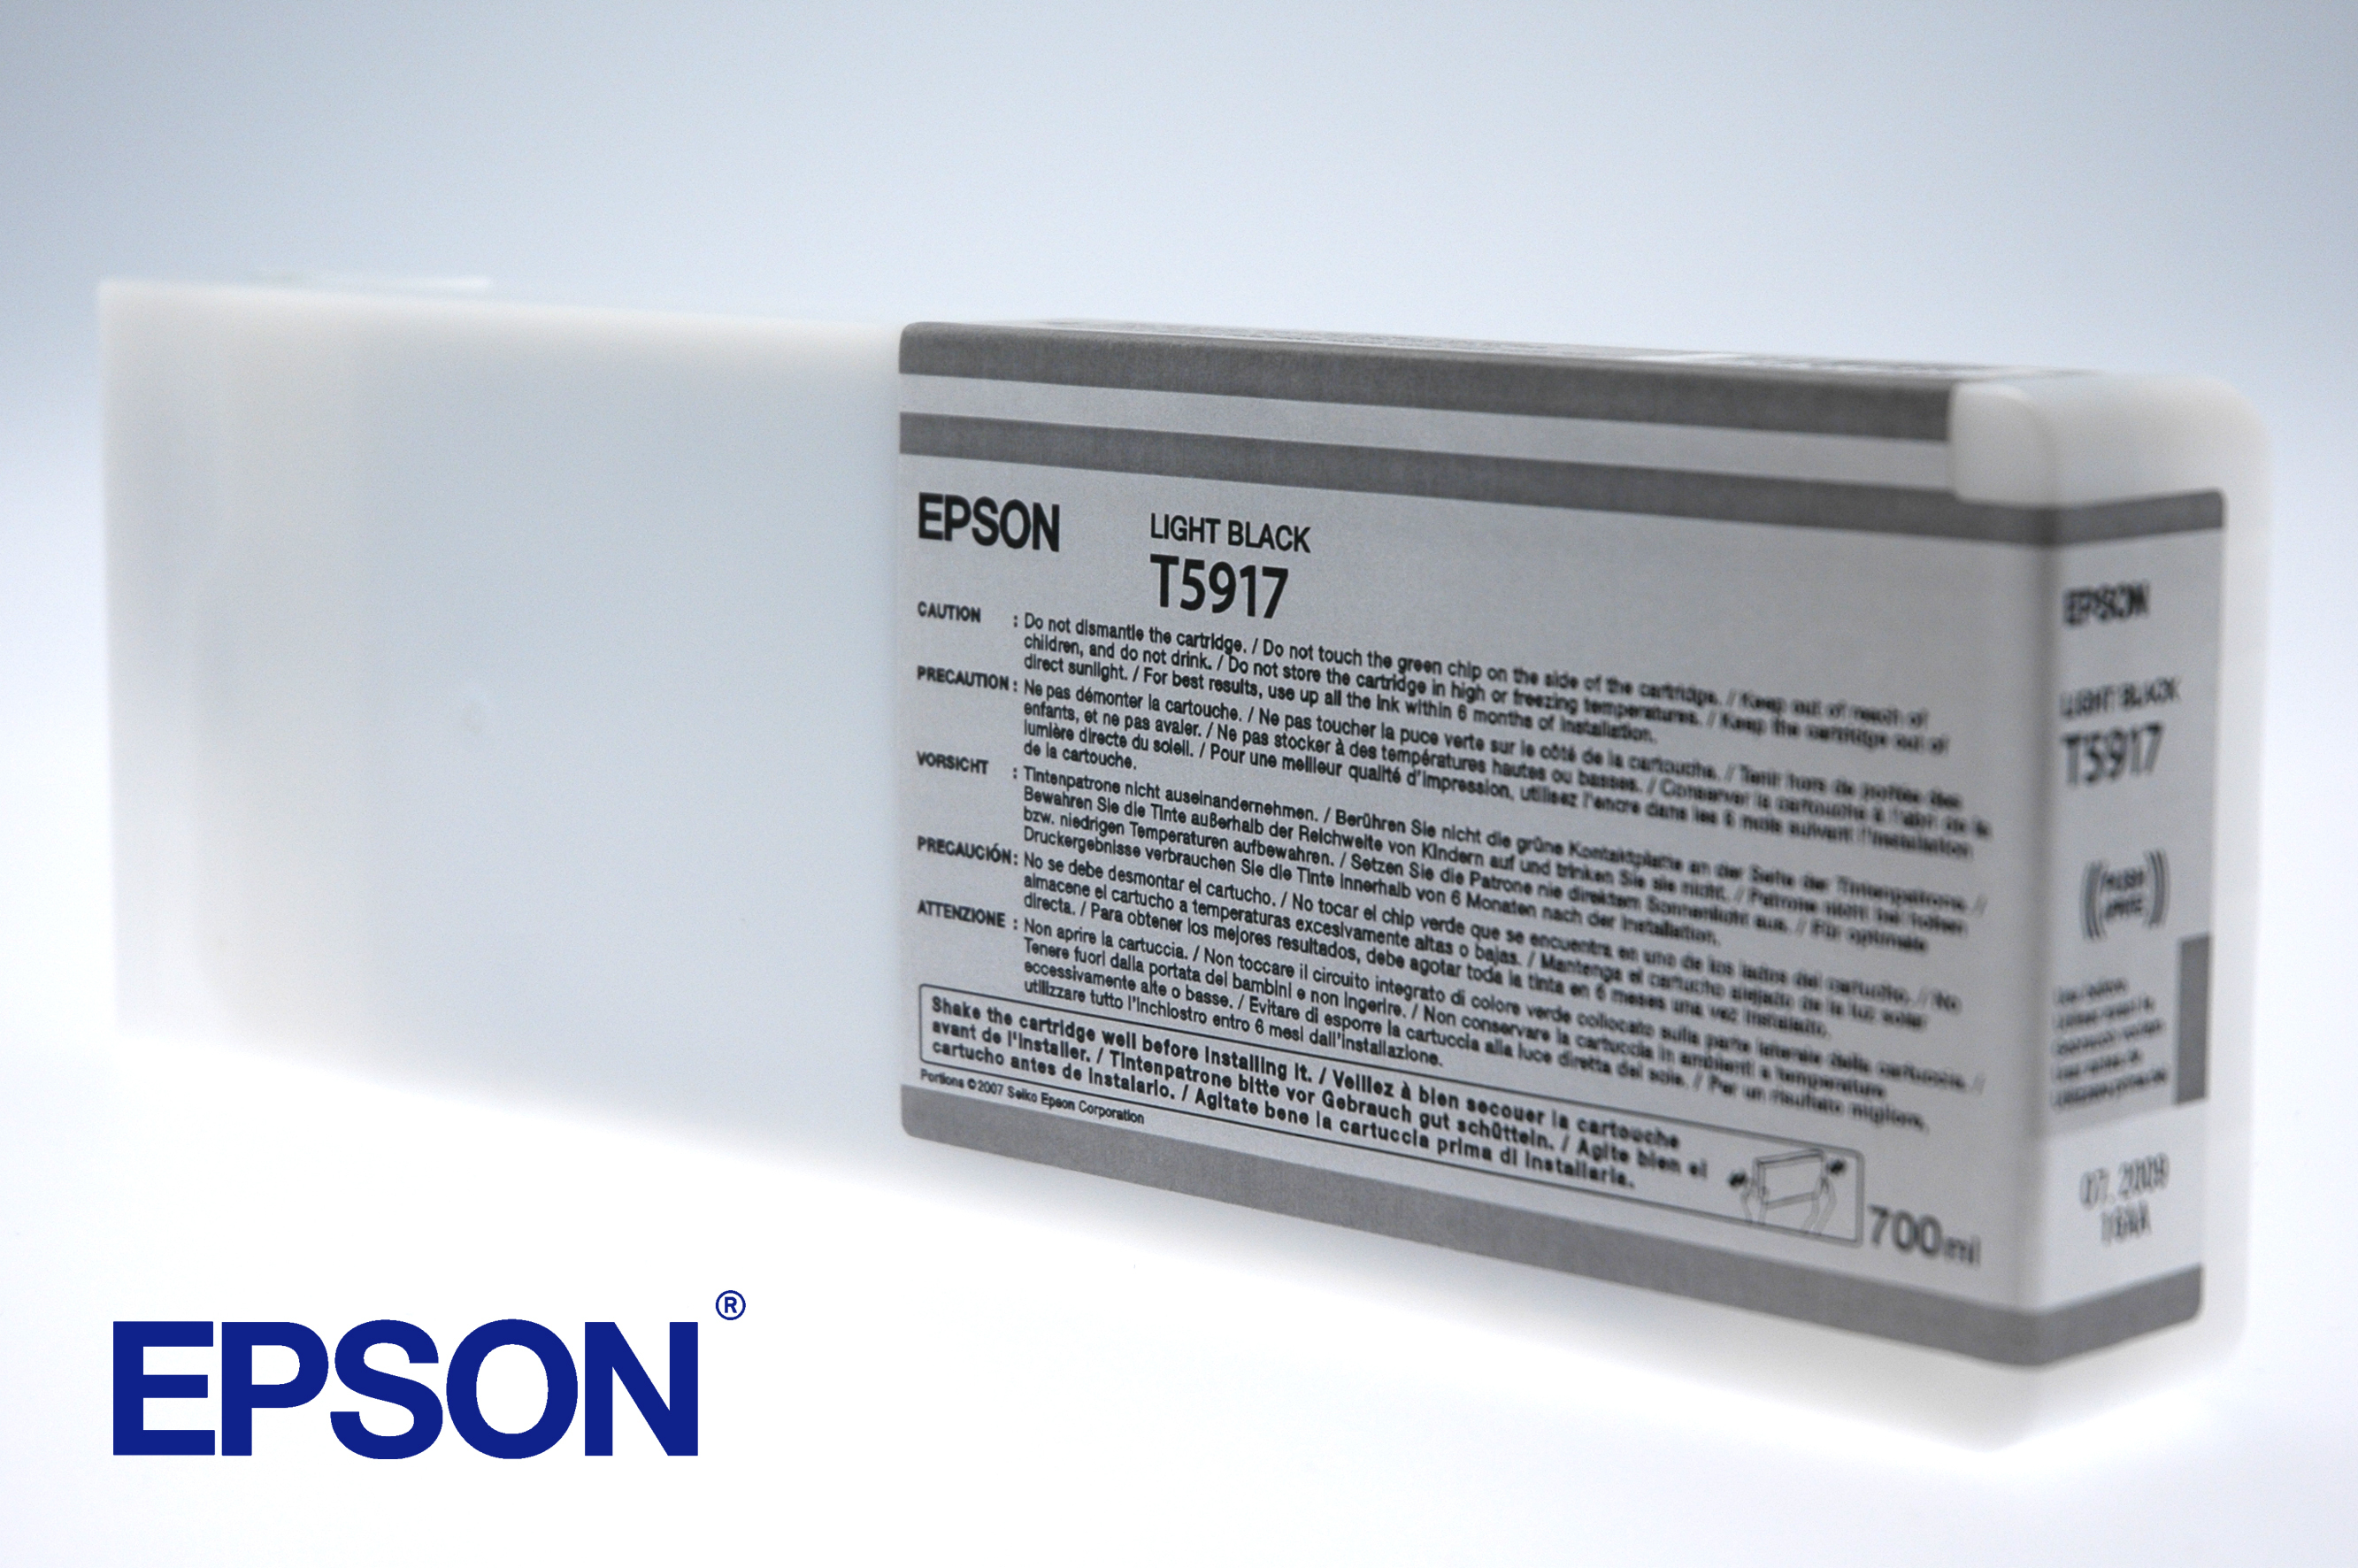 Epson inktpatroon Light Black T591700 single pack / Licht zwart